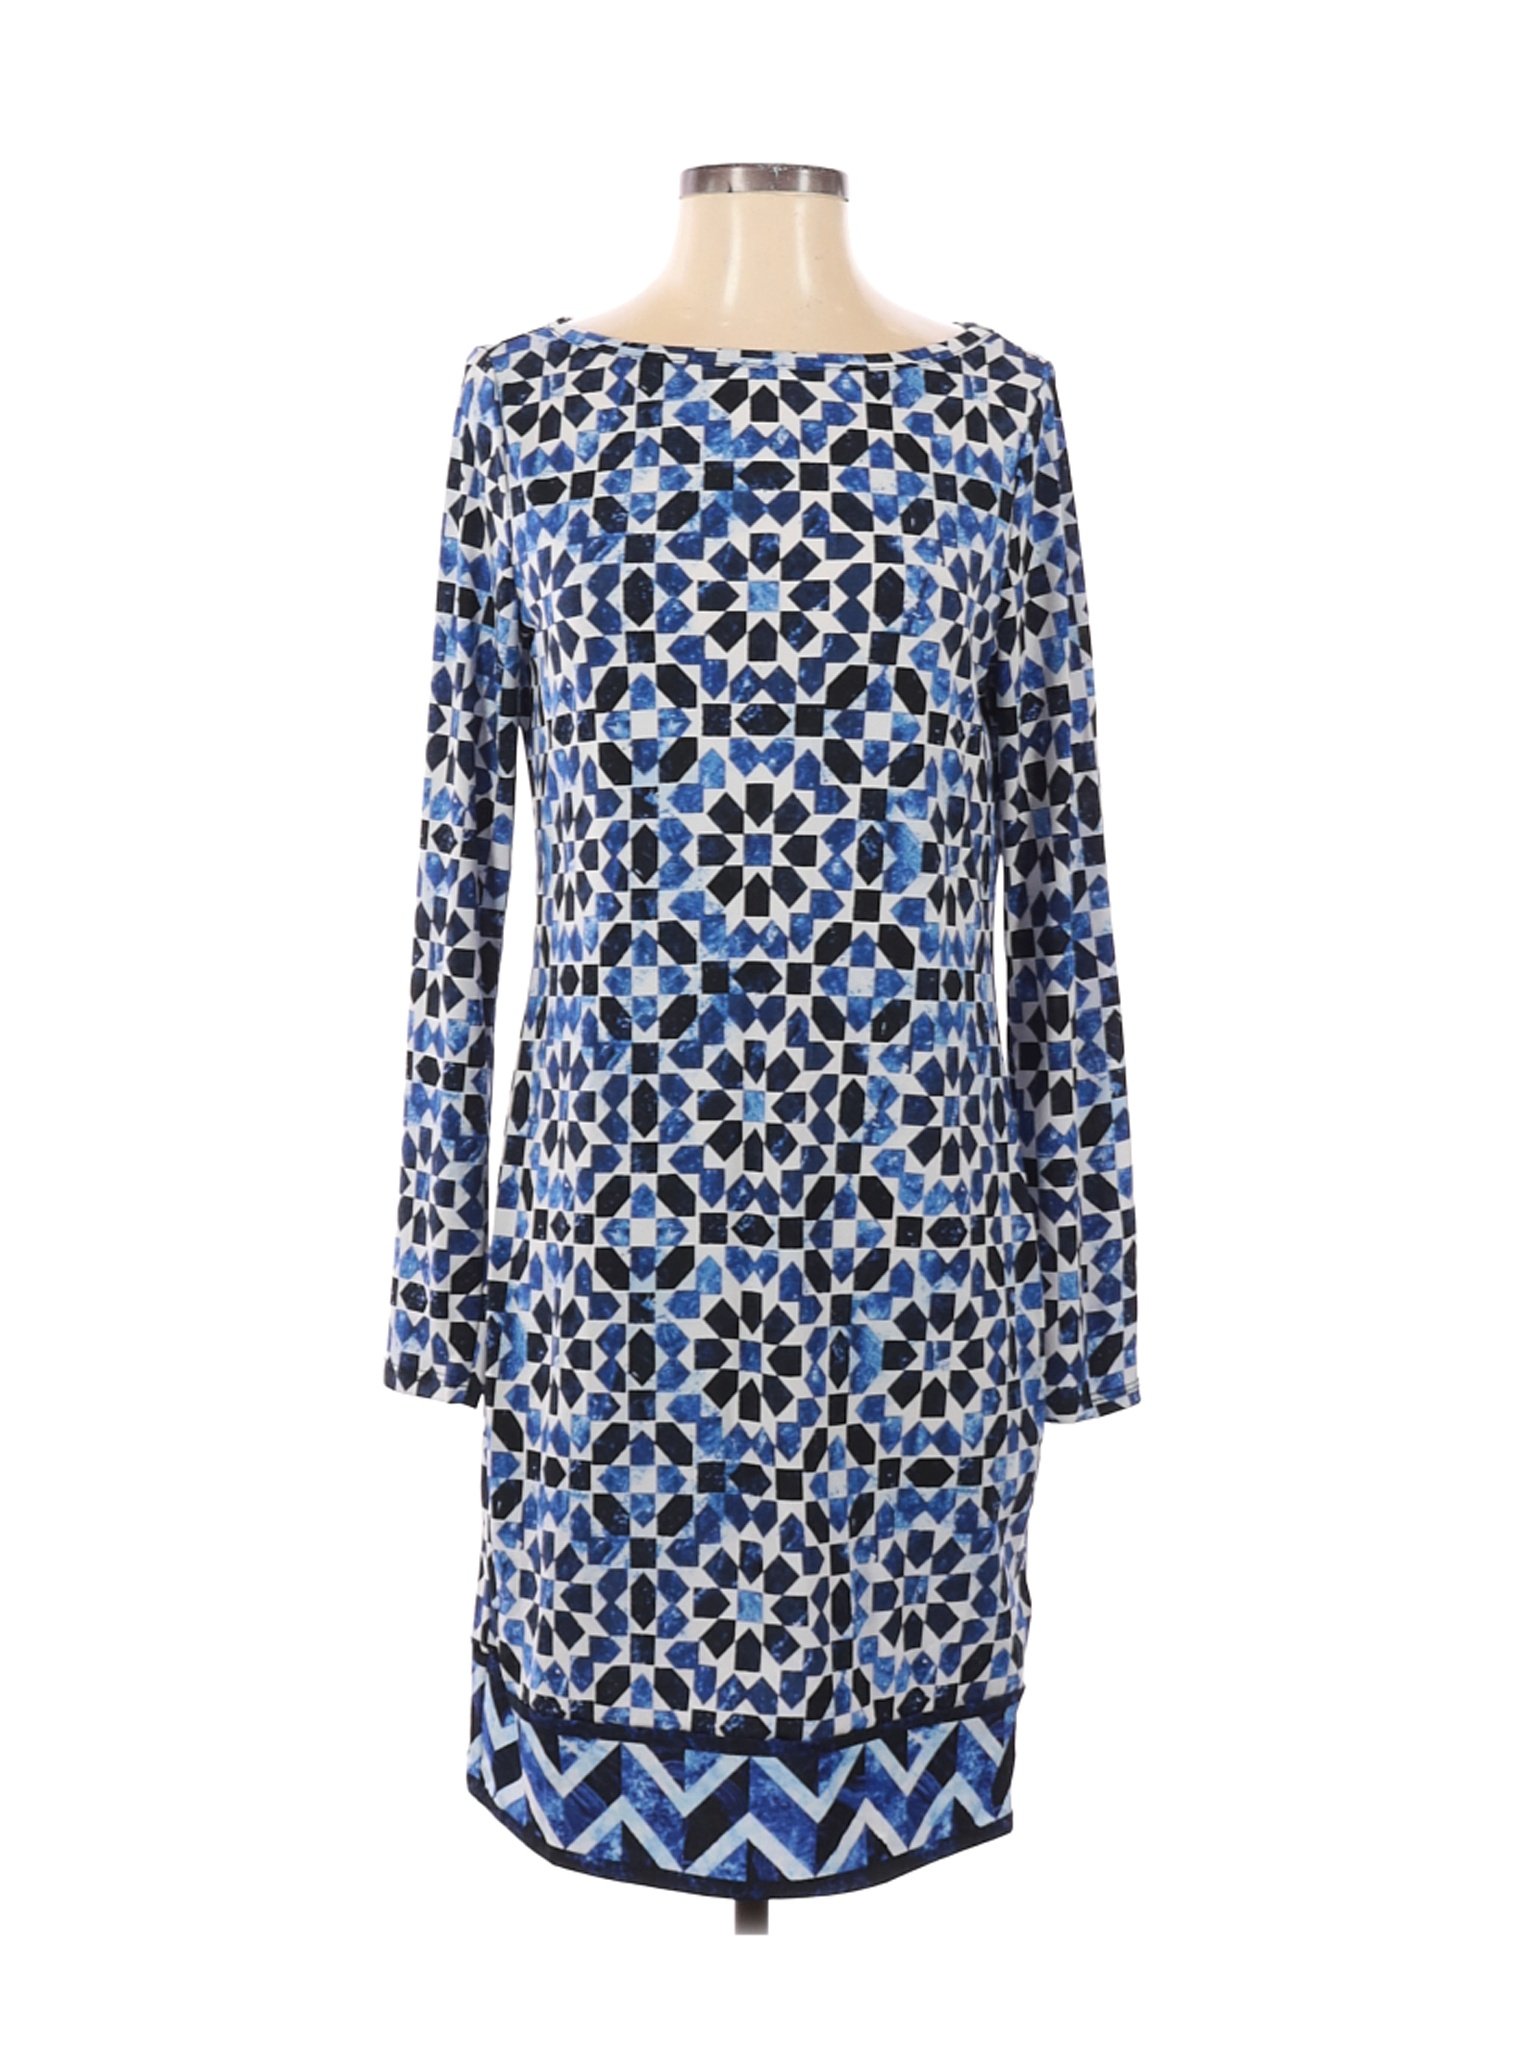 MICHAEL Michael Kors Women Blue Casual Dress S | eBay